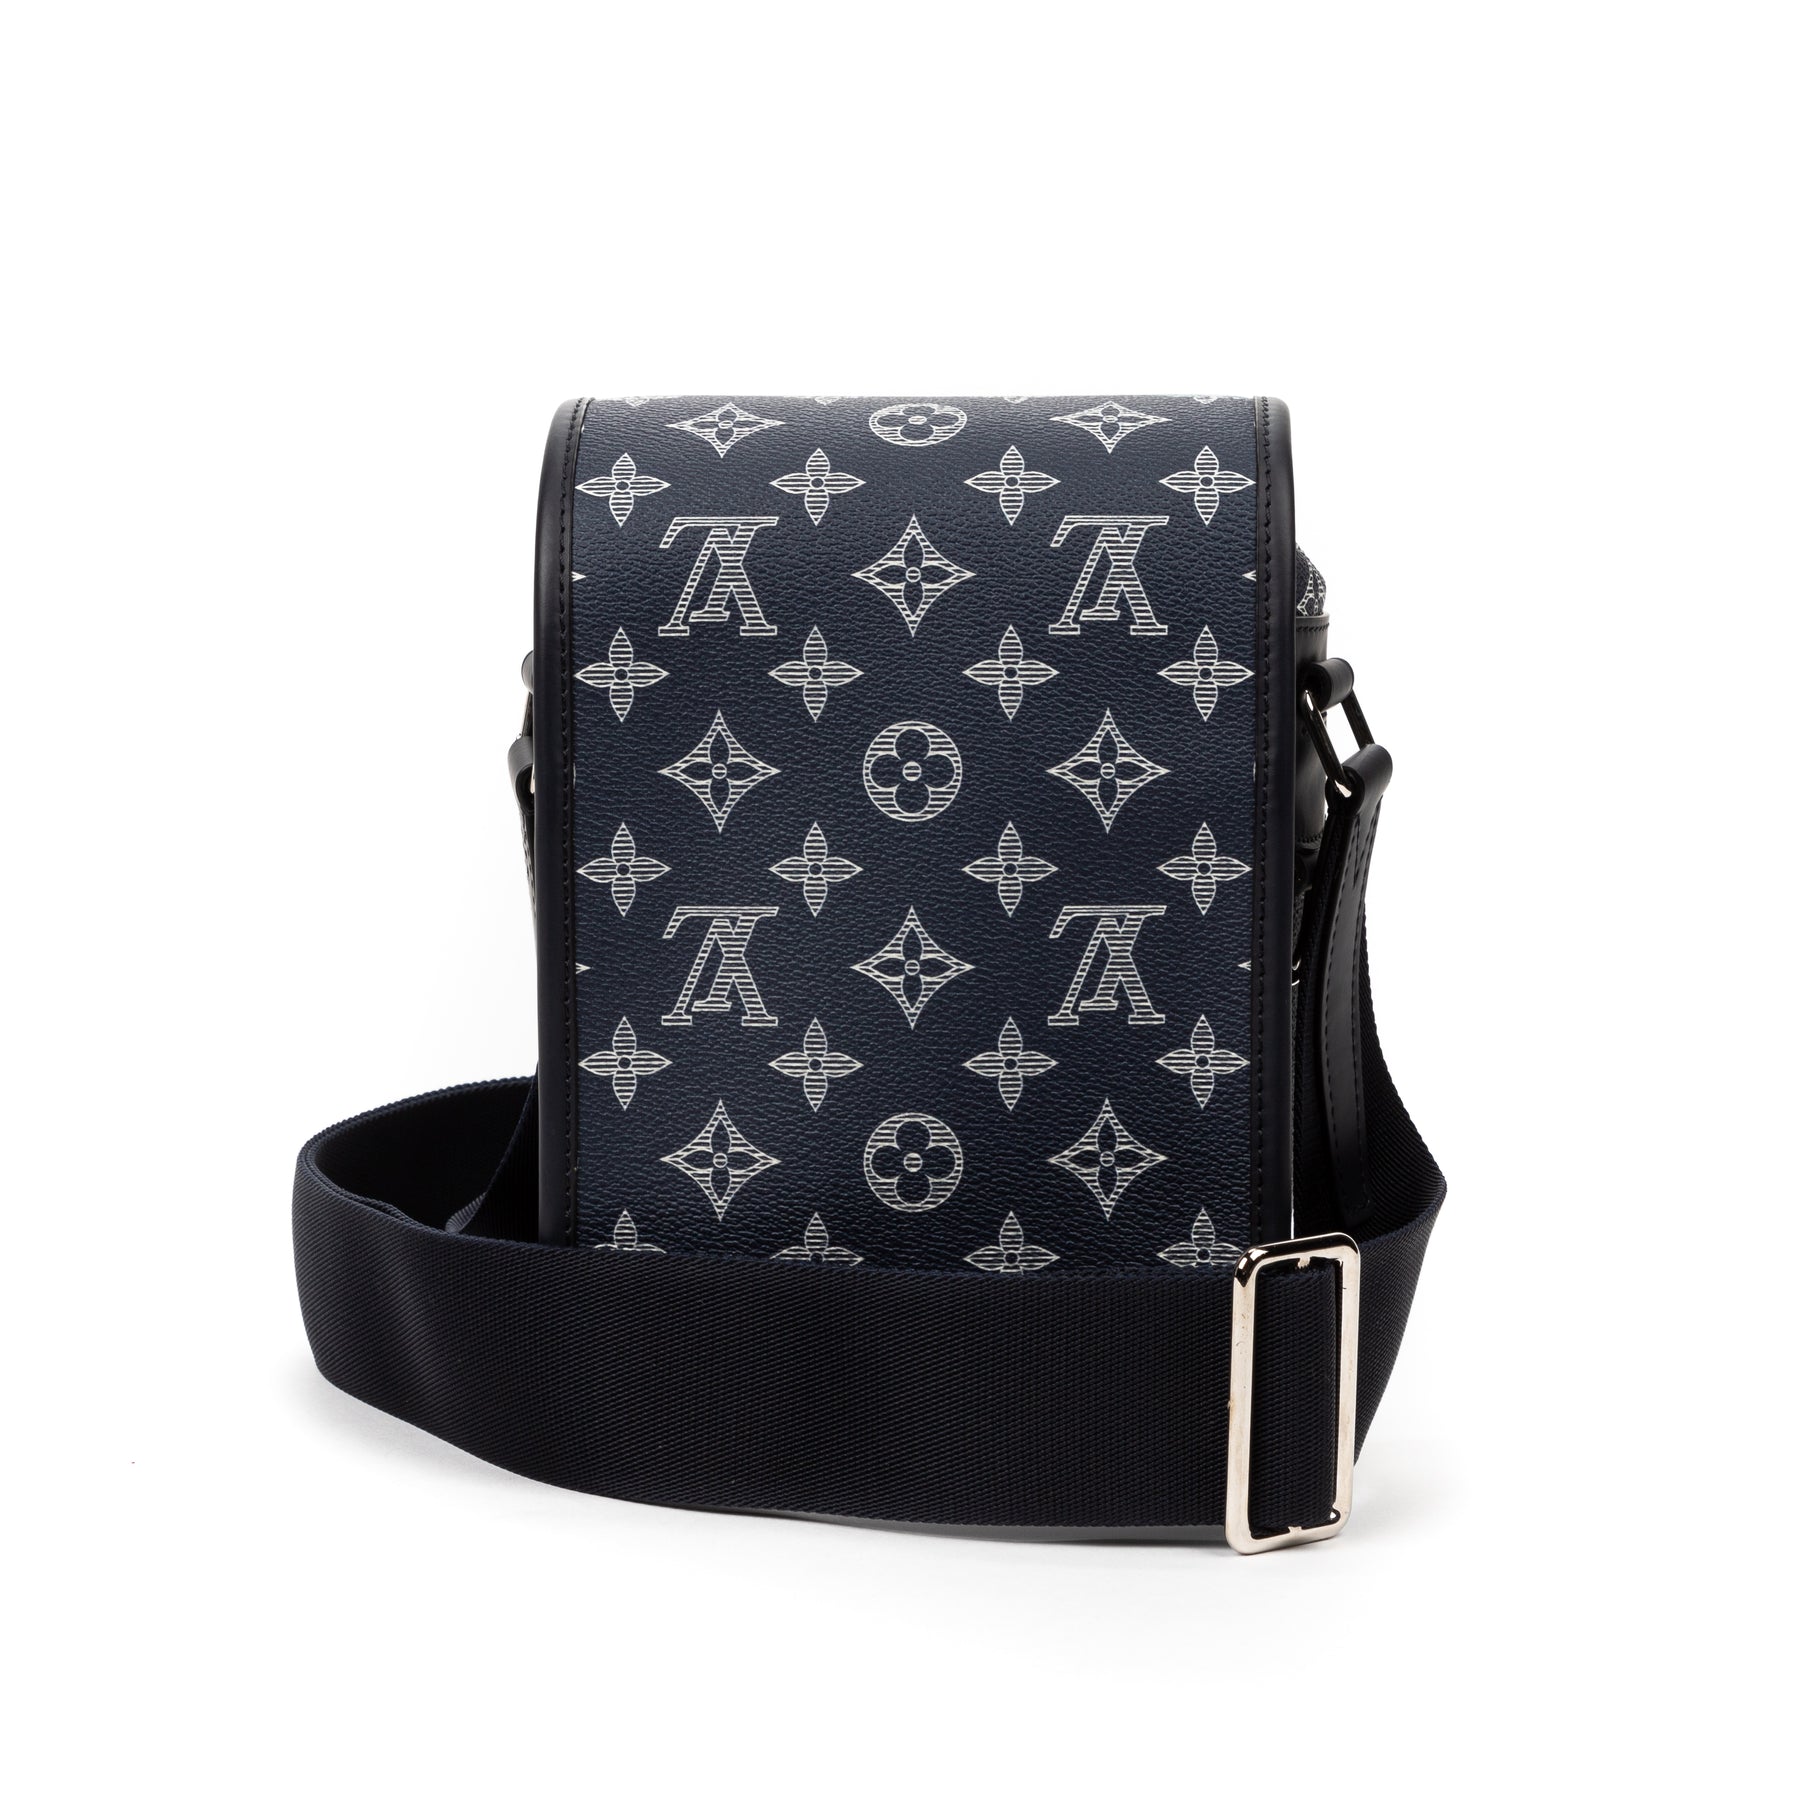 Louis Vuitton Speedy Handbag 365600